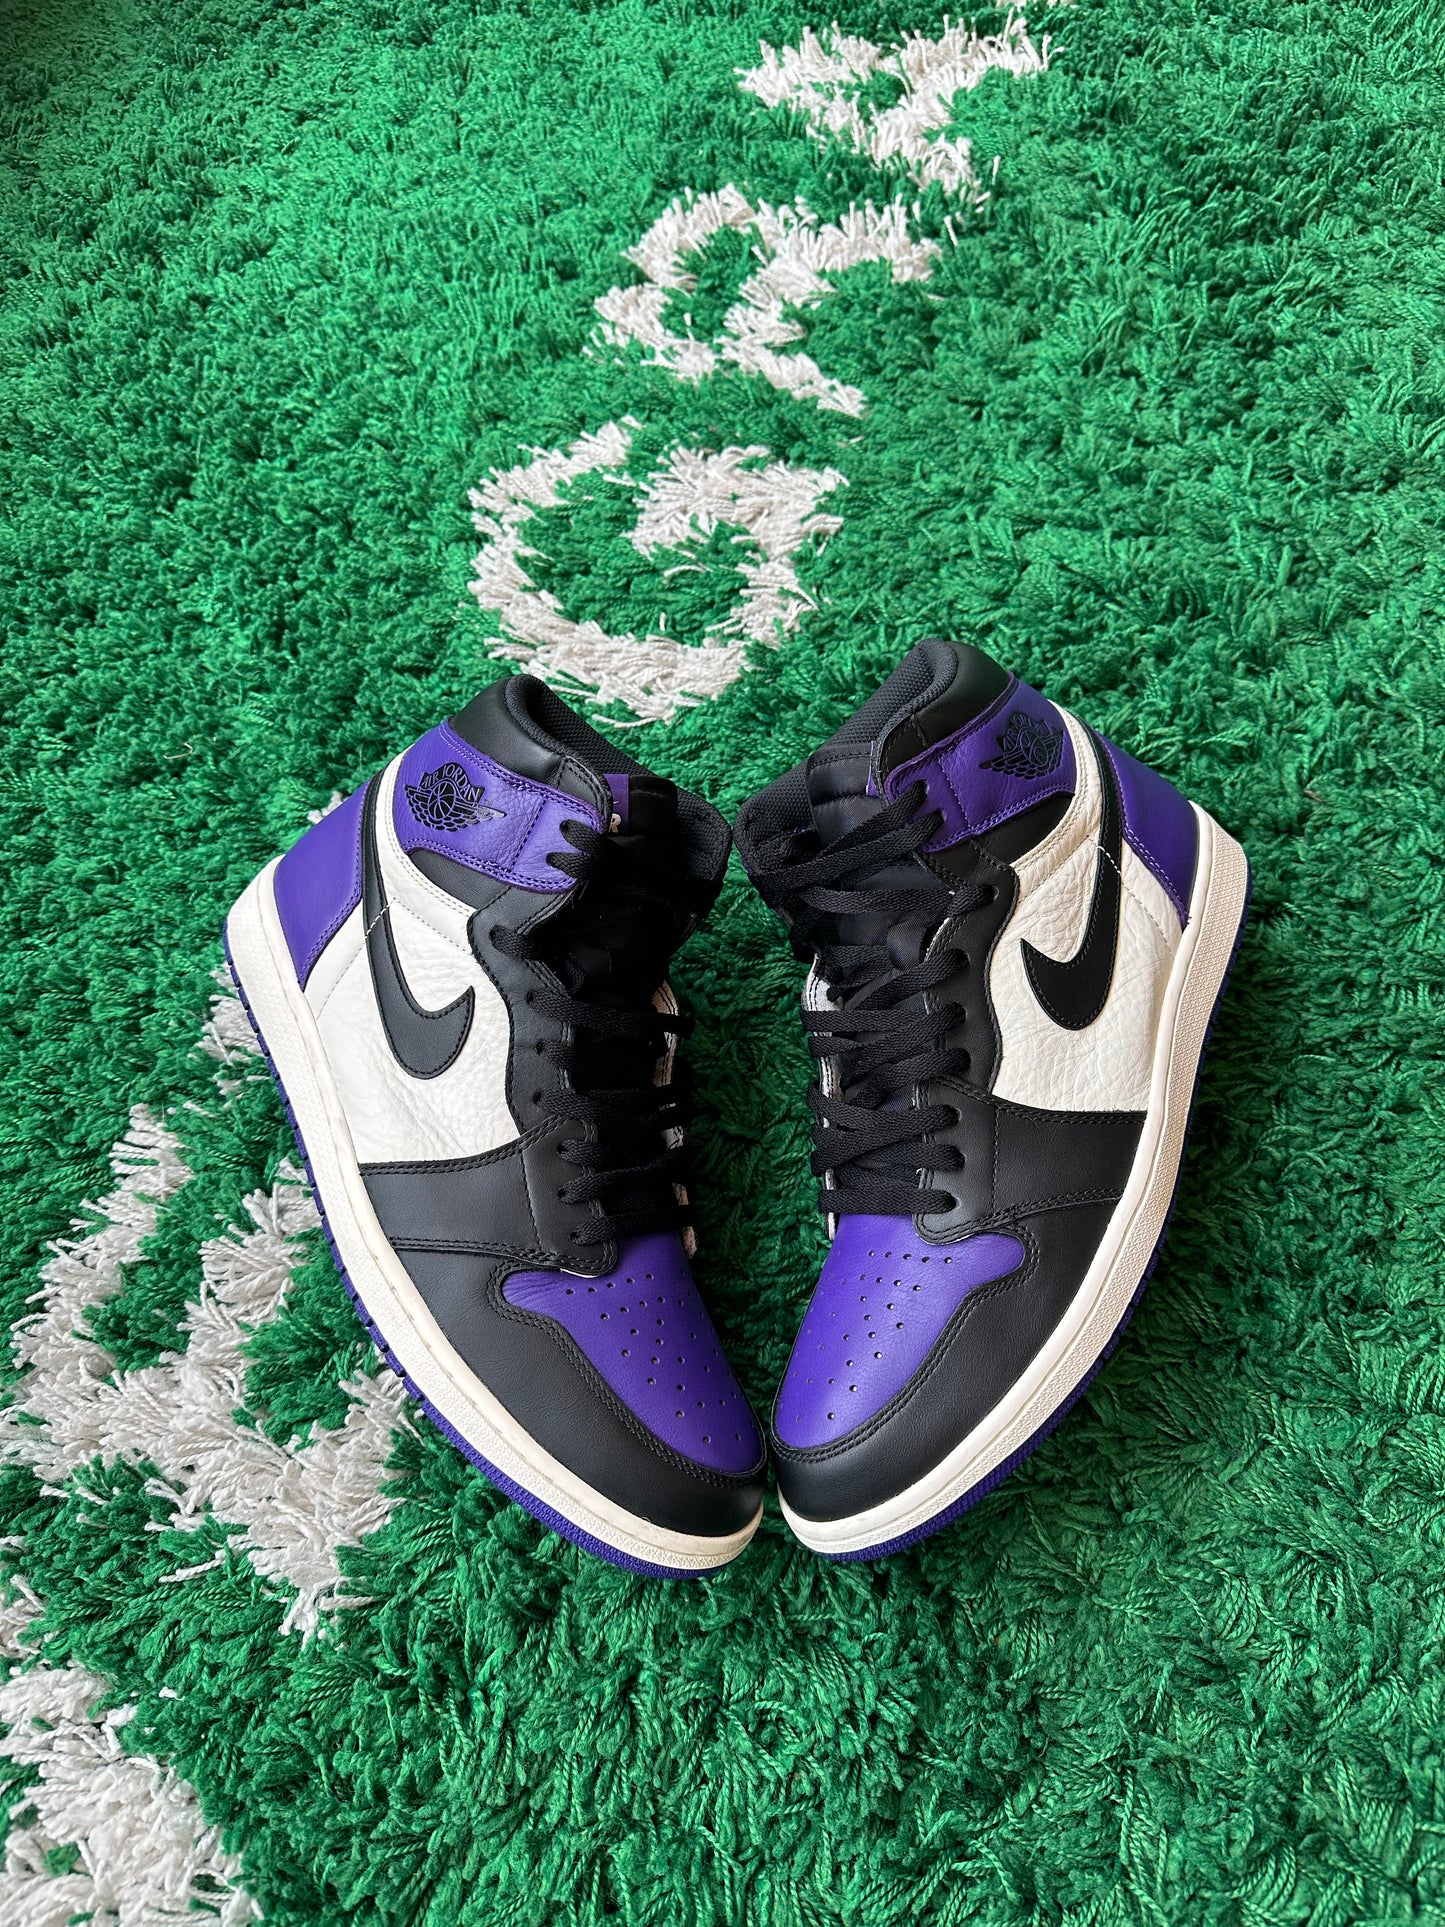 Jordan 1 High “Court Purple 1.0”